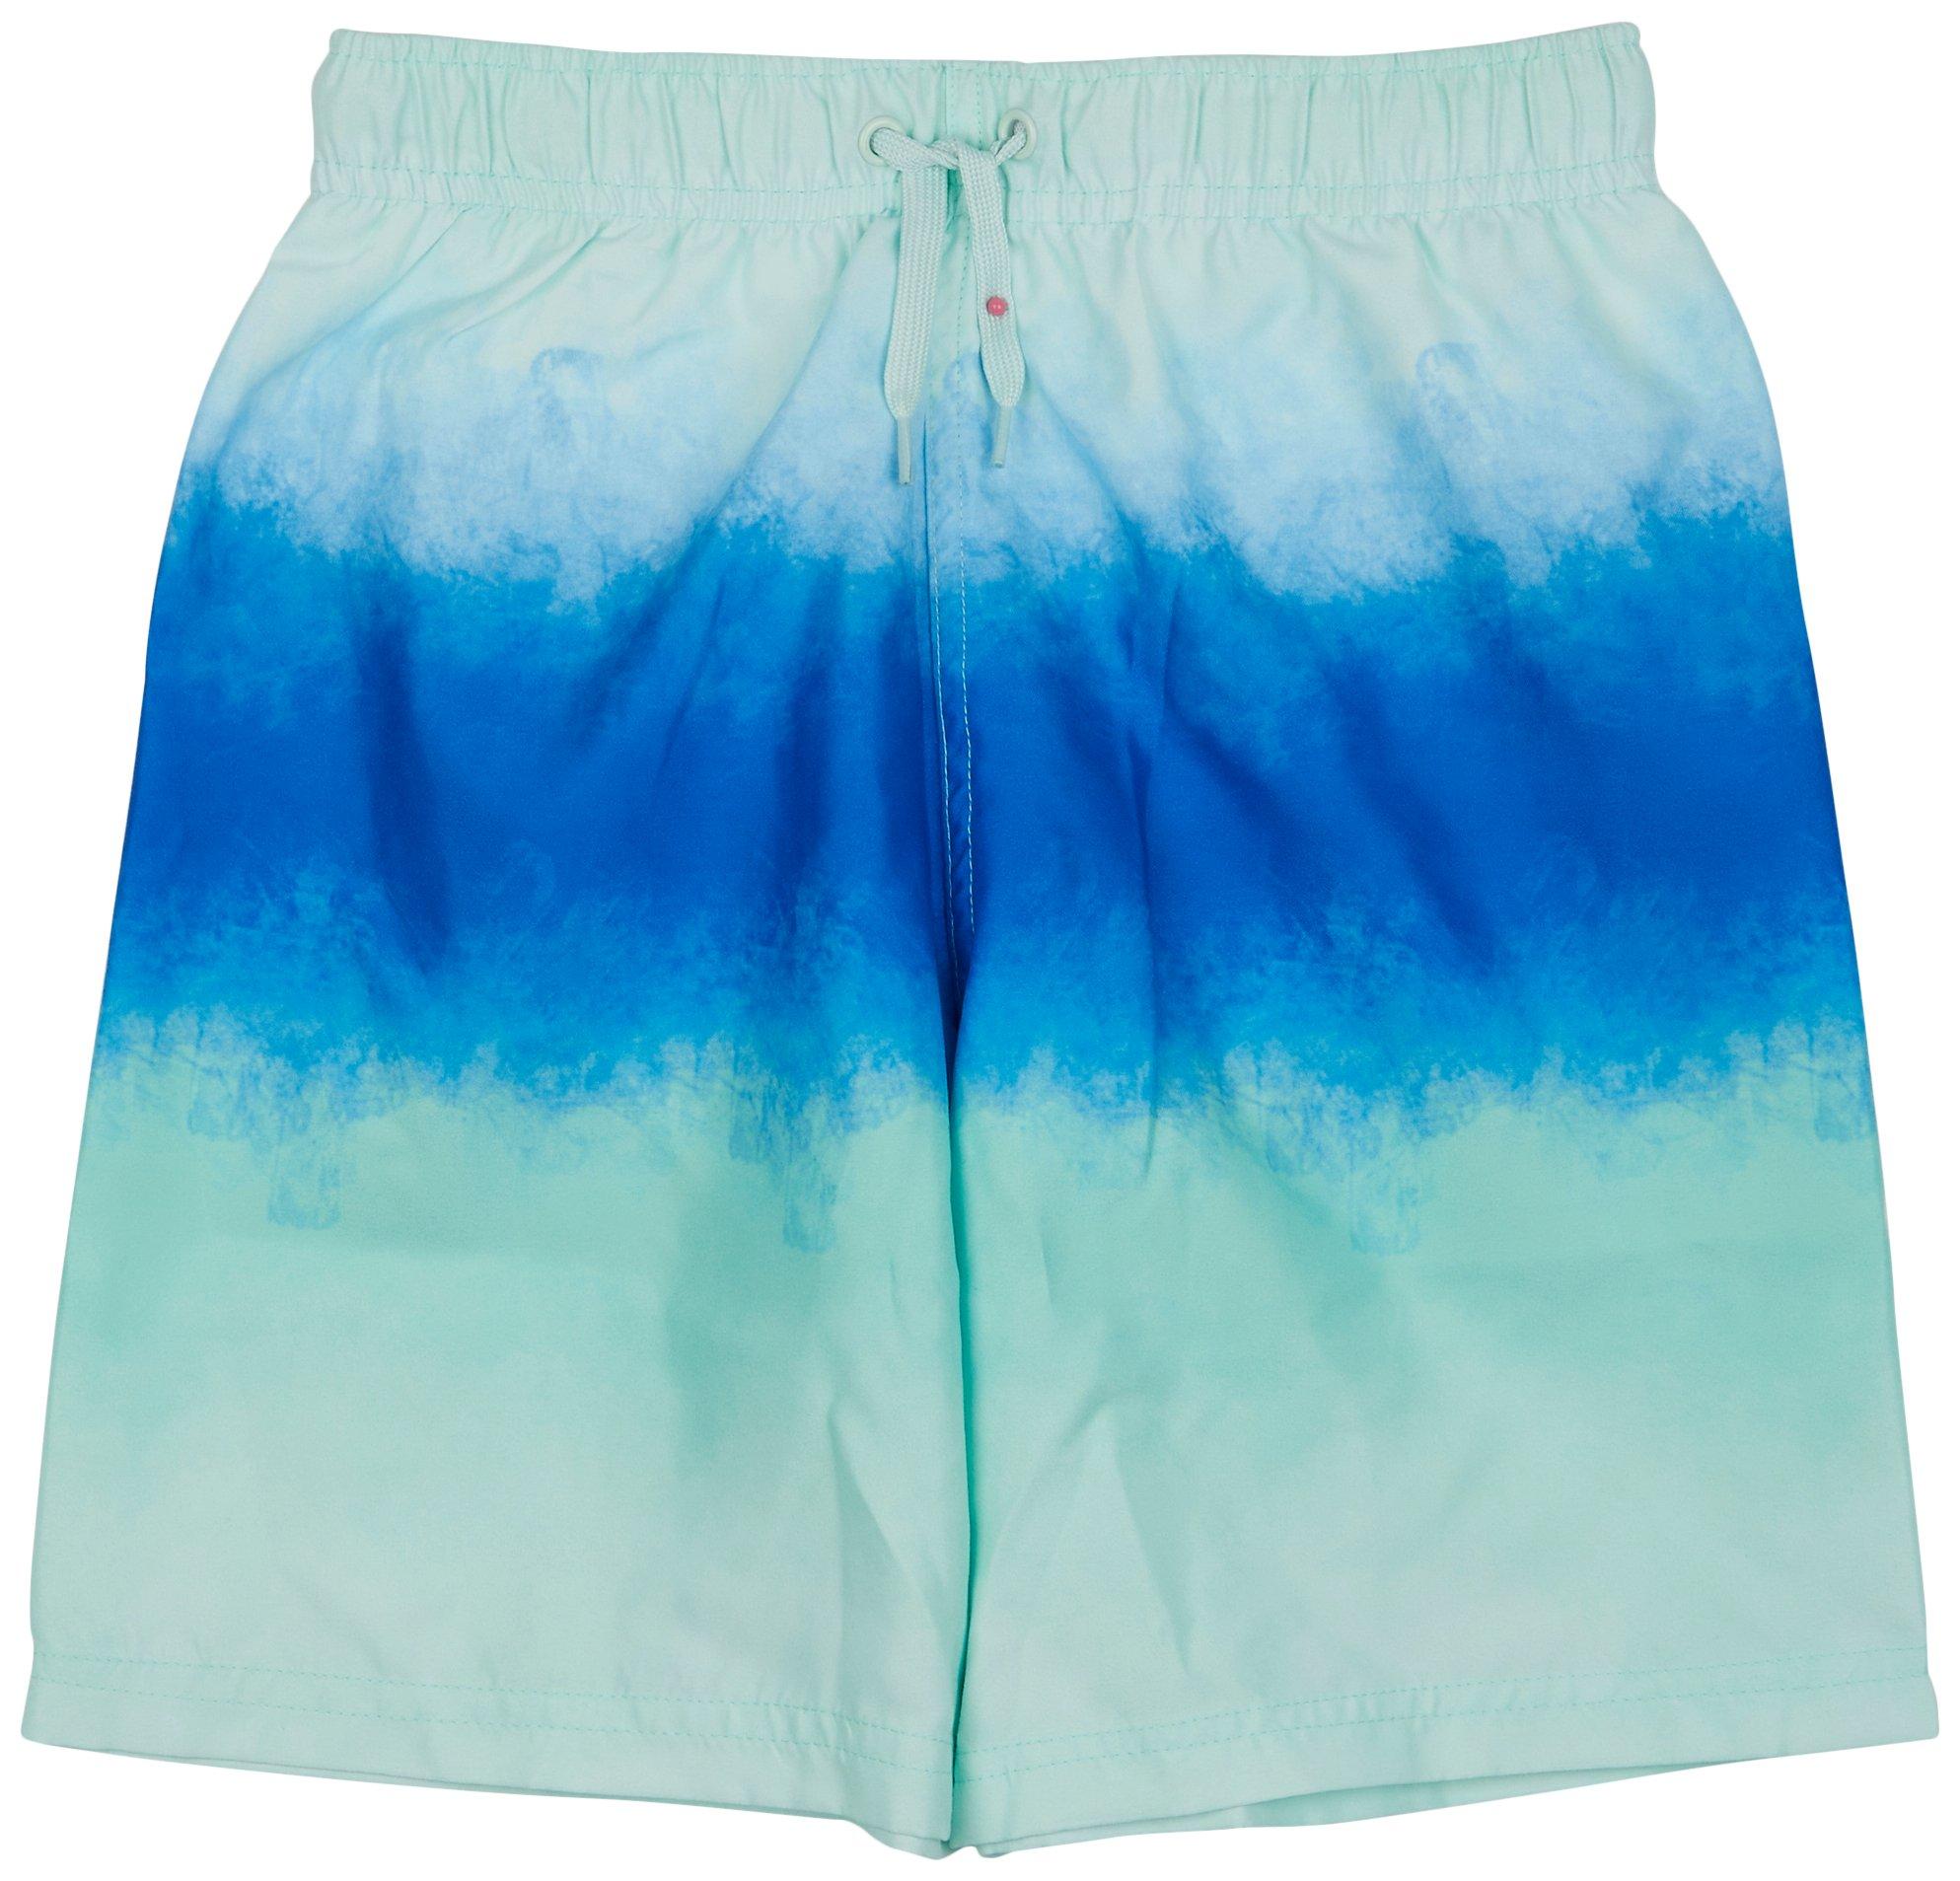 DOT & ZAZZ Big Boys Ombre Blue Print Swimsuit Shorts